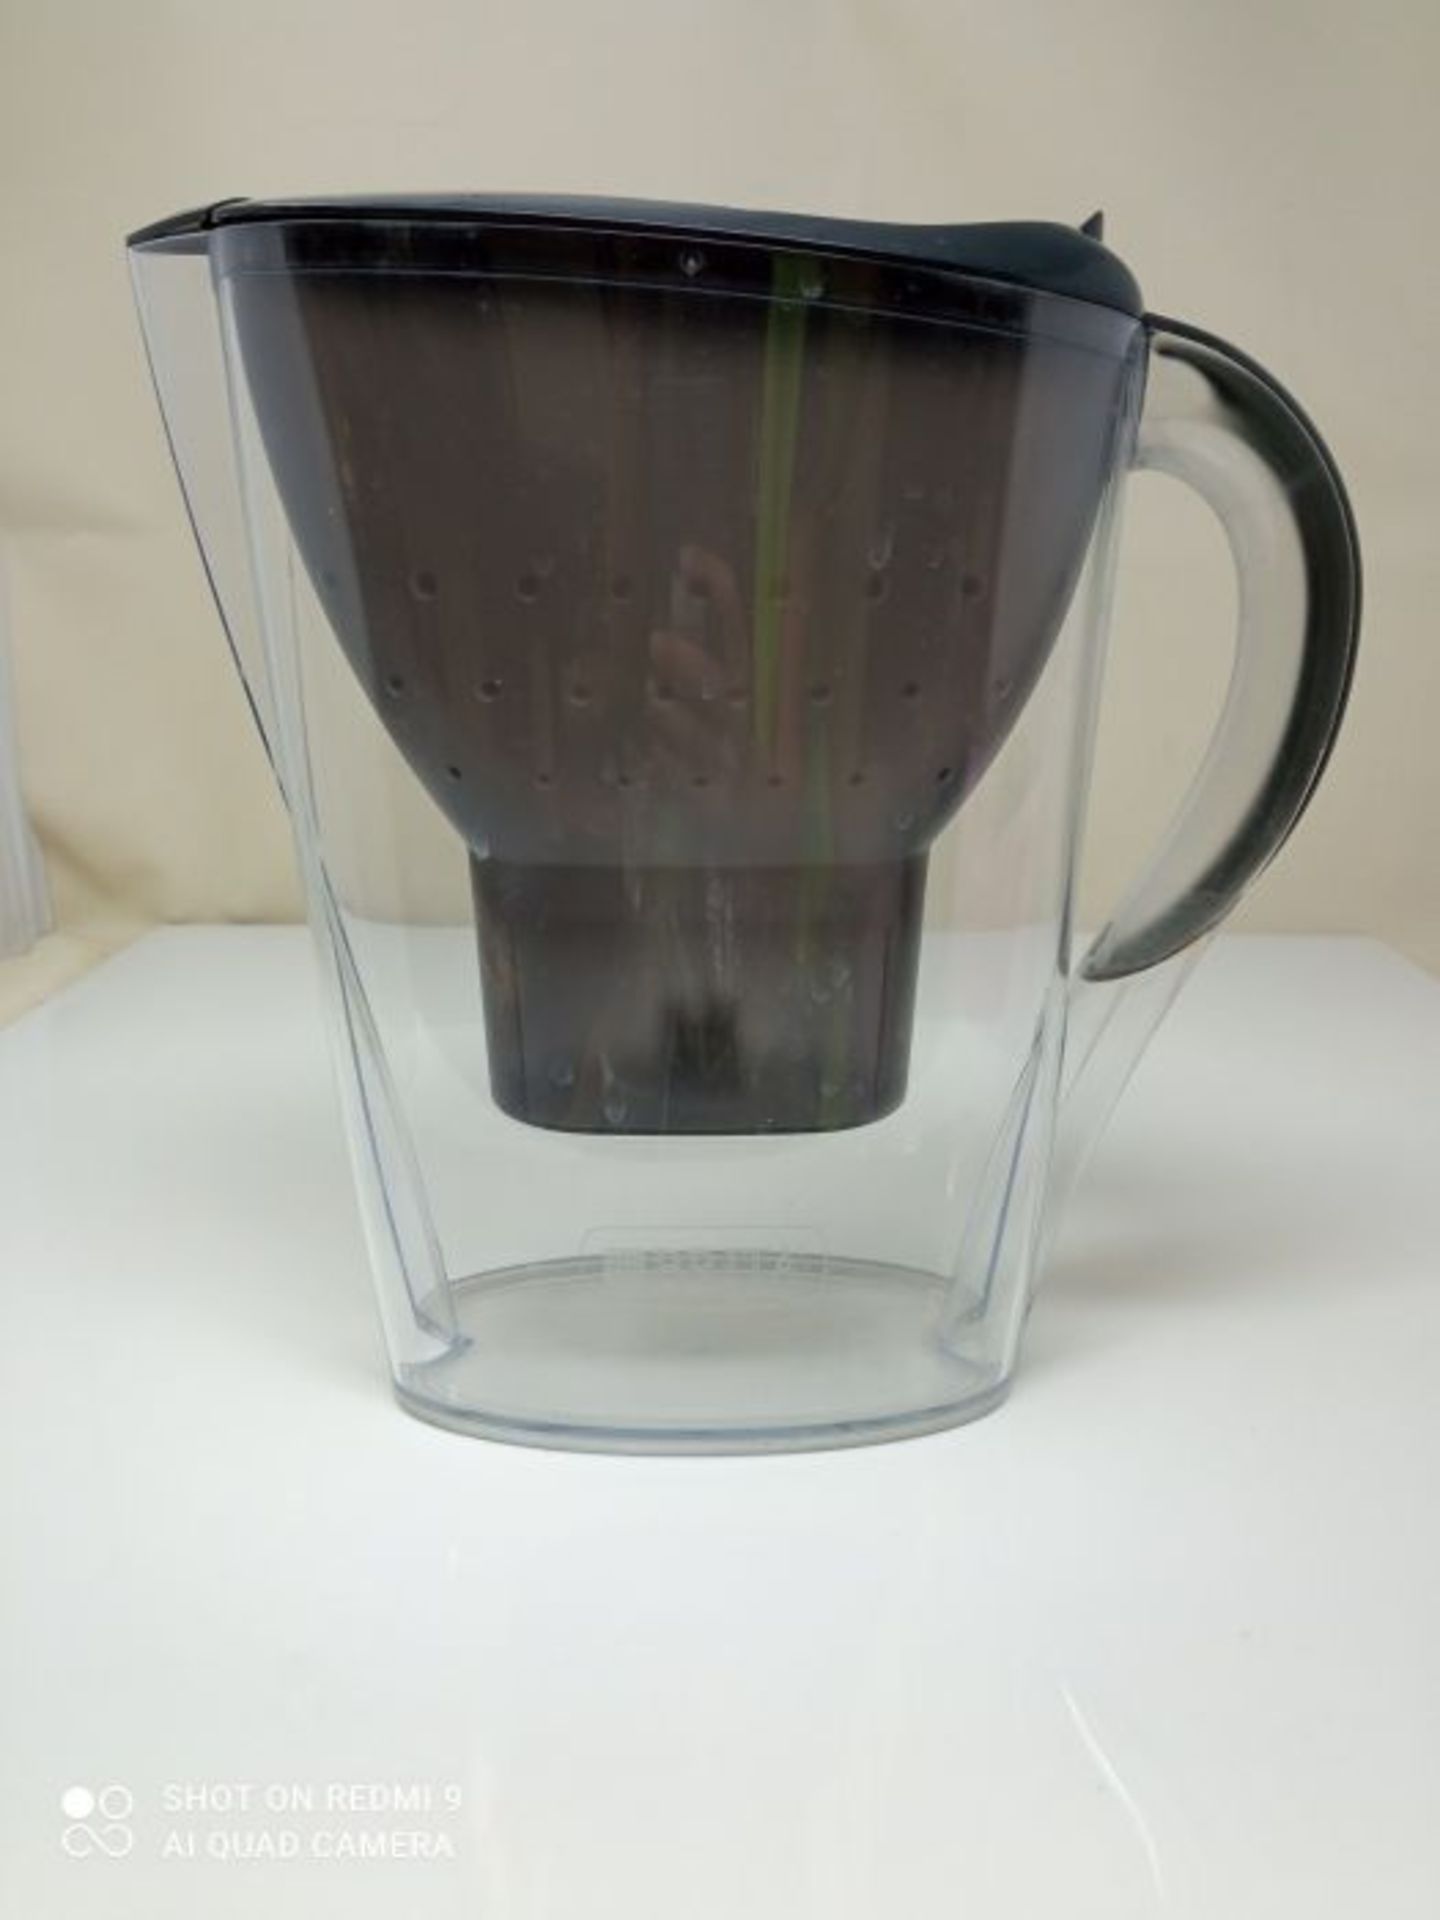 [INCOMPLETE] BRITA Marella fridge water filter jug for reduction of chlorine, limescal - Image 2 of 3